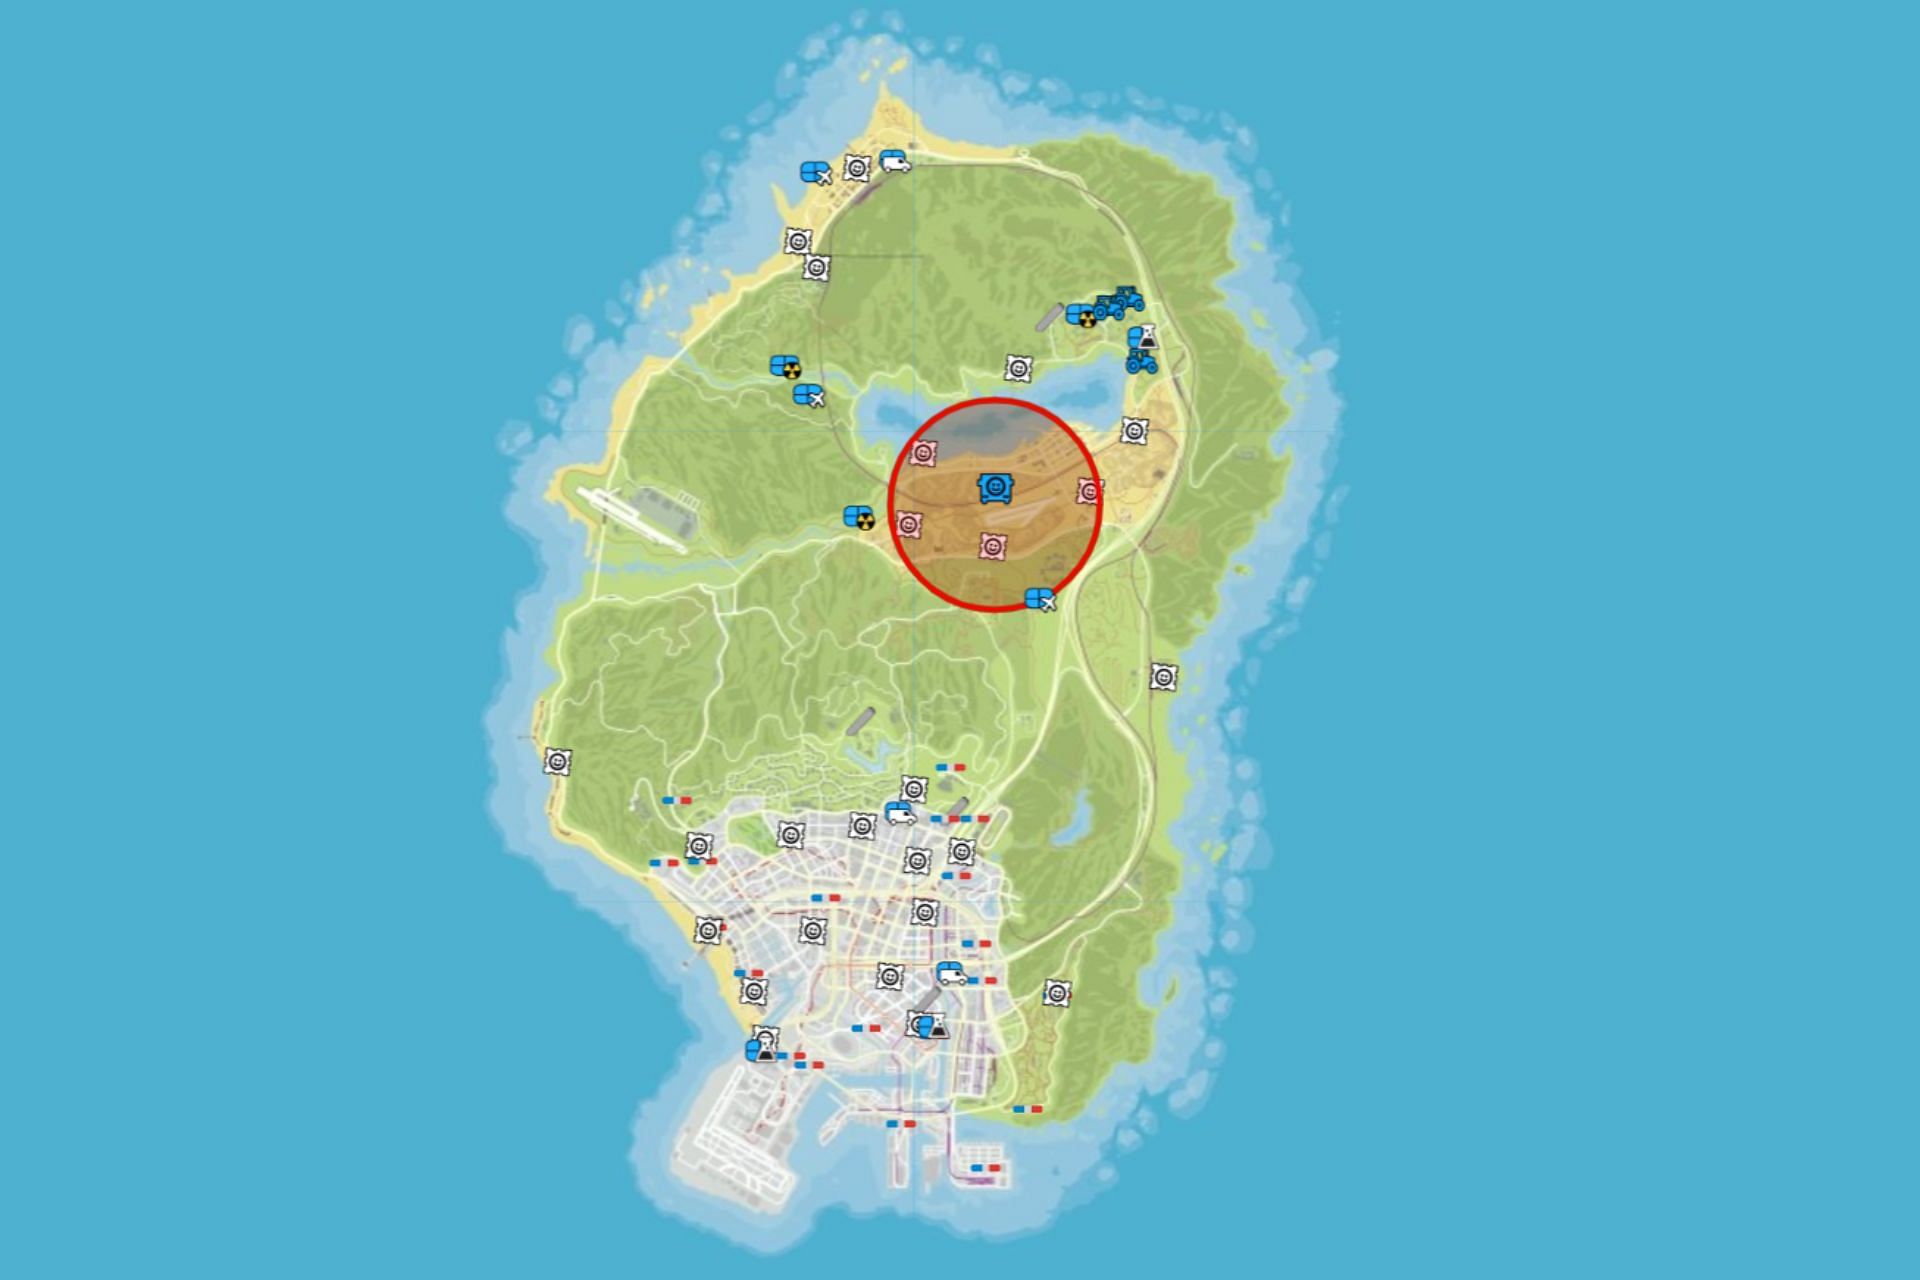 Gta 5 Map Revealed